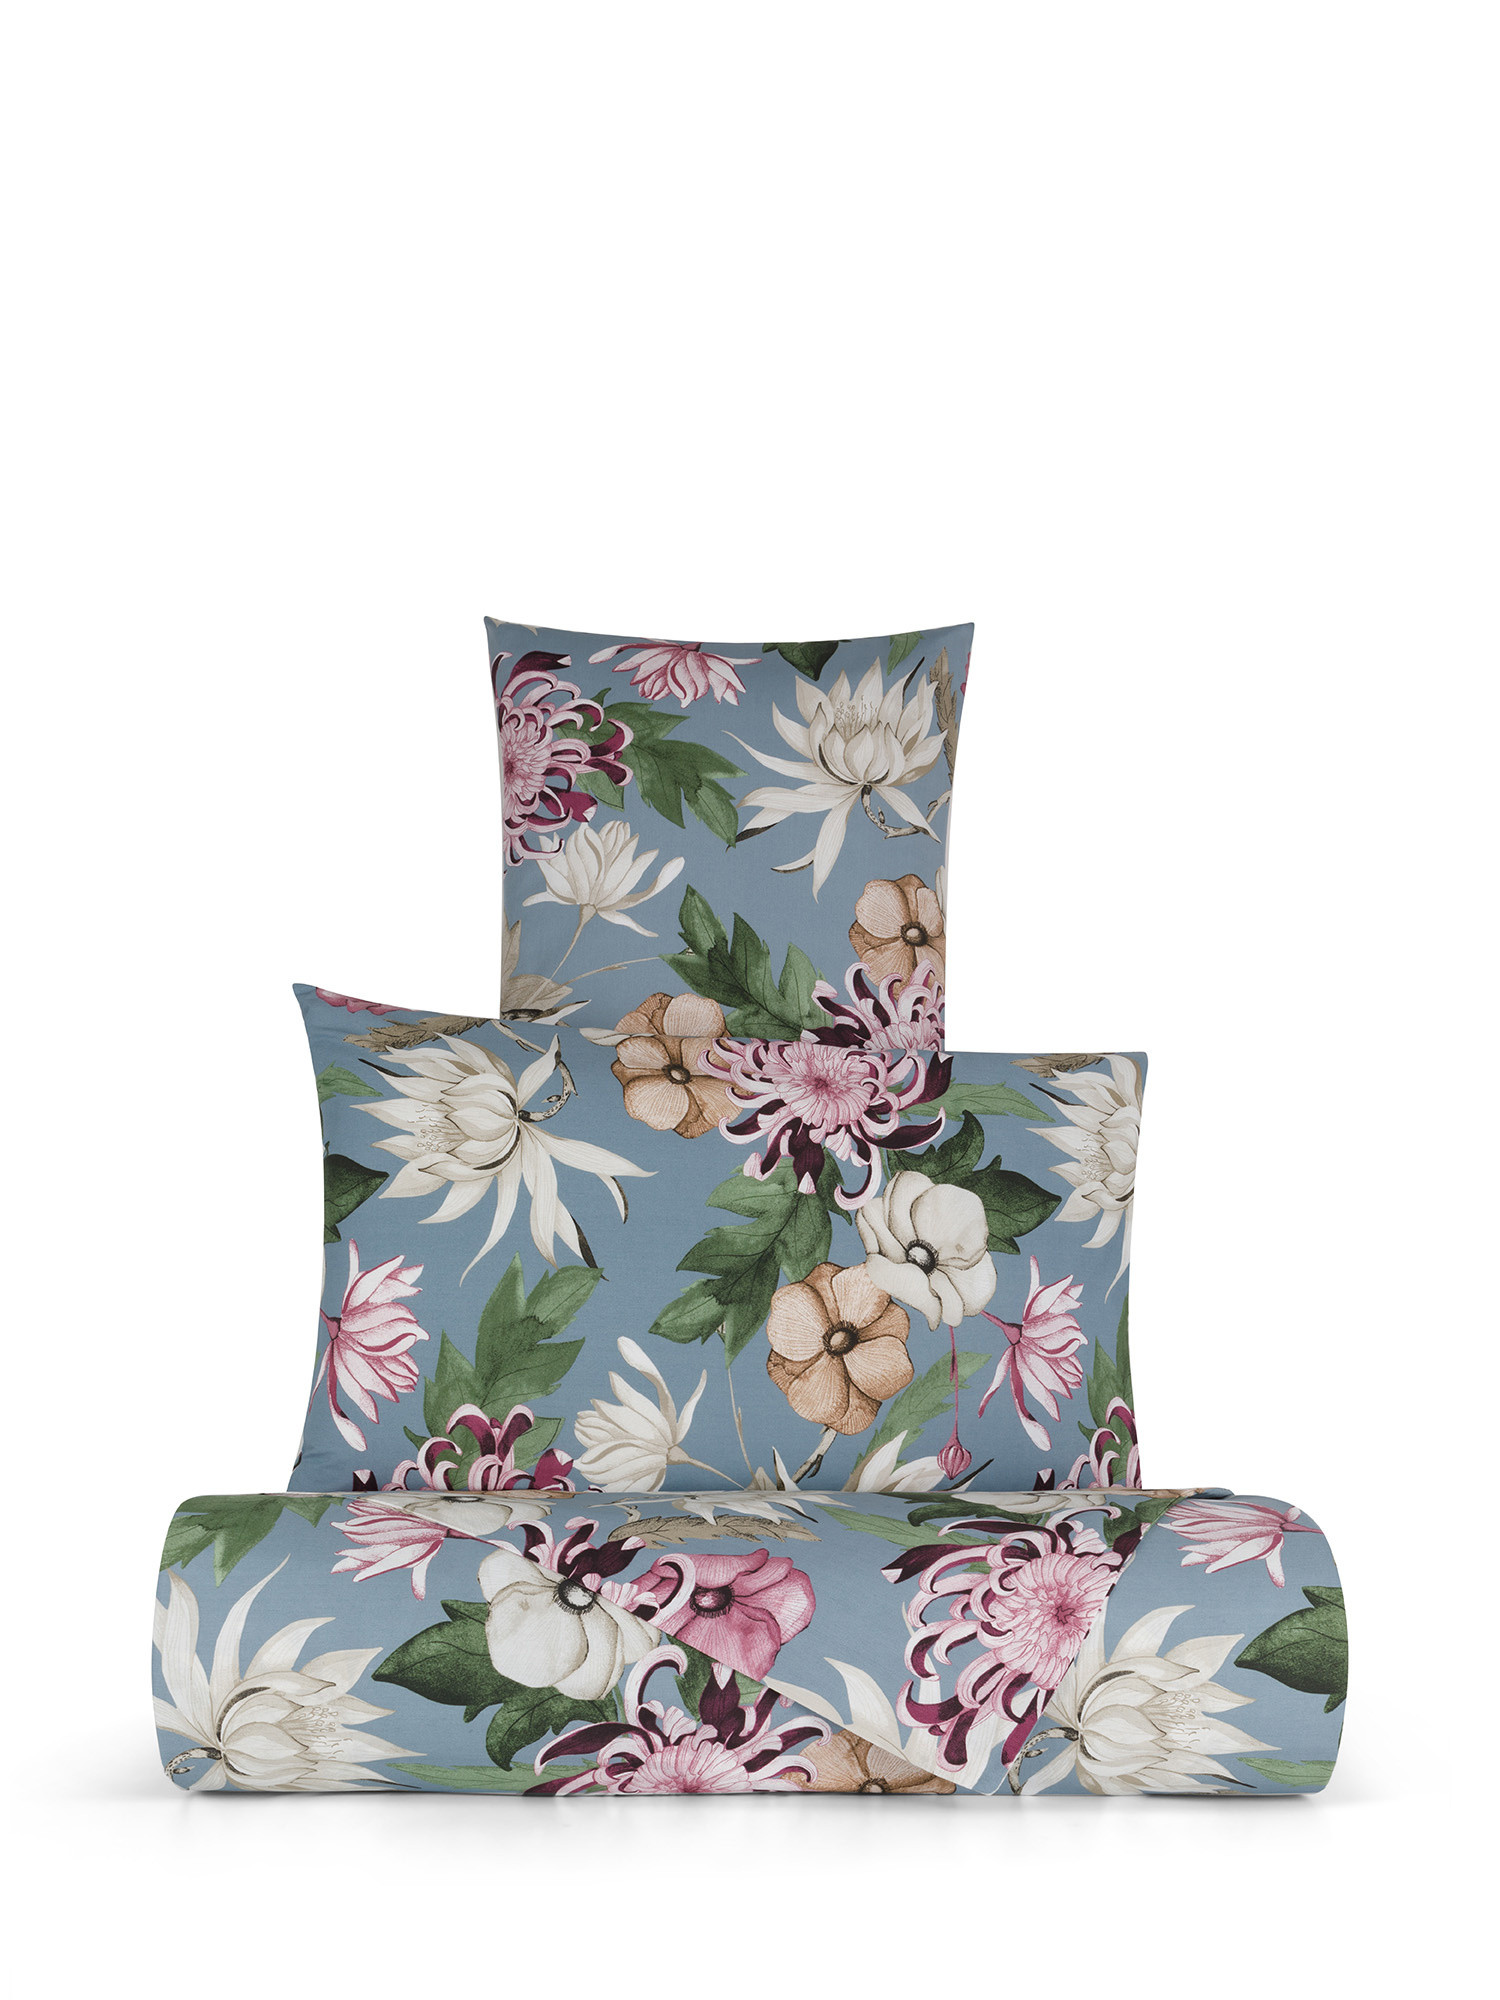 Floral patterned cotton percale duvet cover set, Multicolor, large image number 0